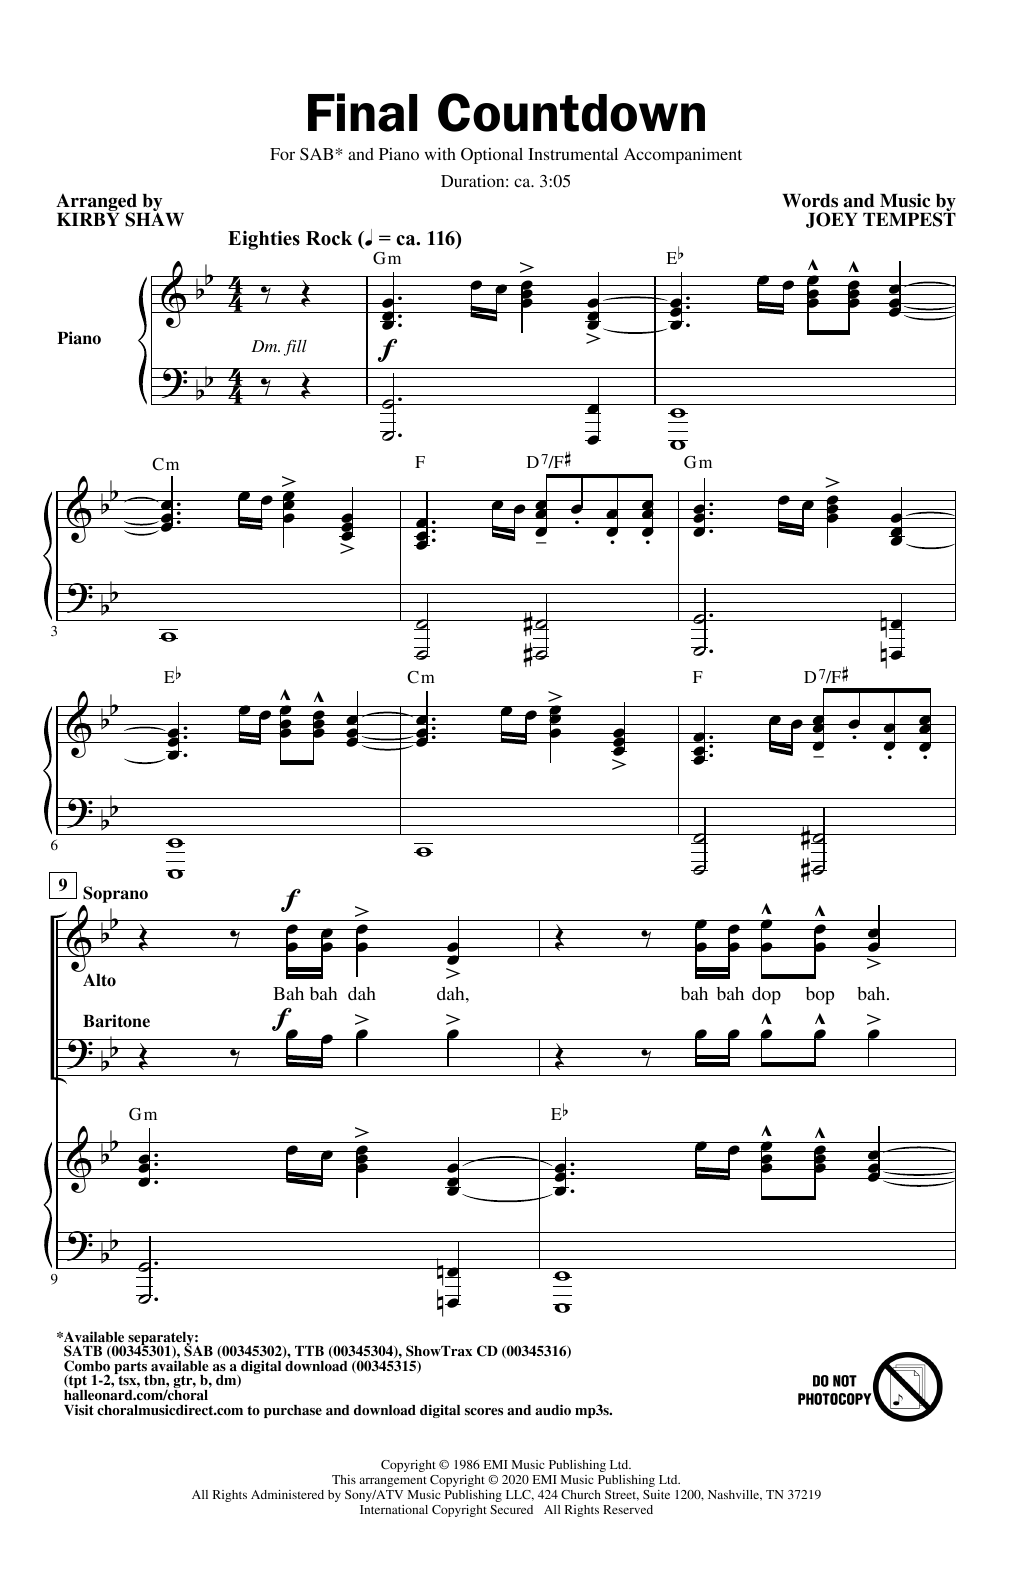 Europe Final Countdown (arr. Kirby Shaw) Sheet Music Notes & Chords for TTBB Choir - Download or Print PDF